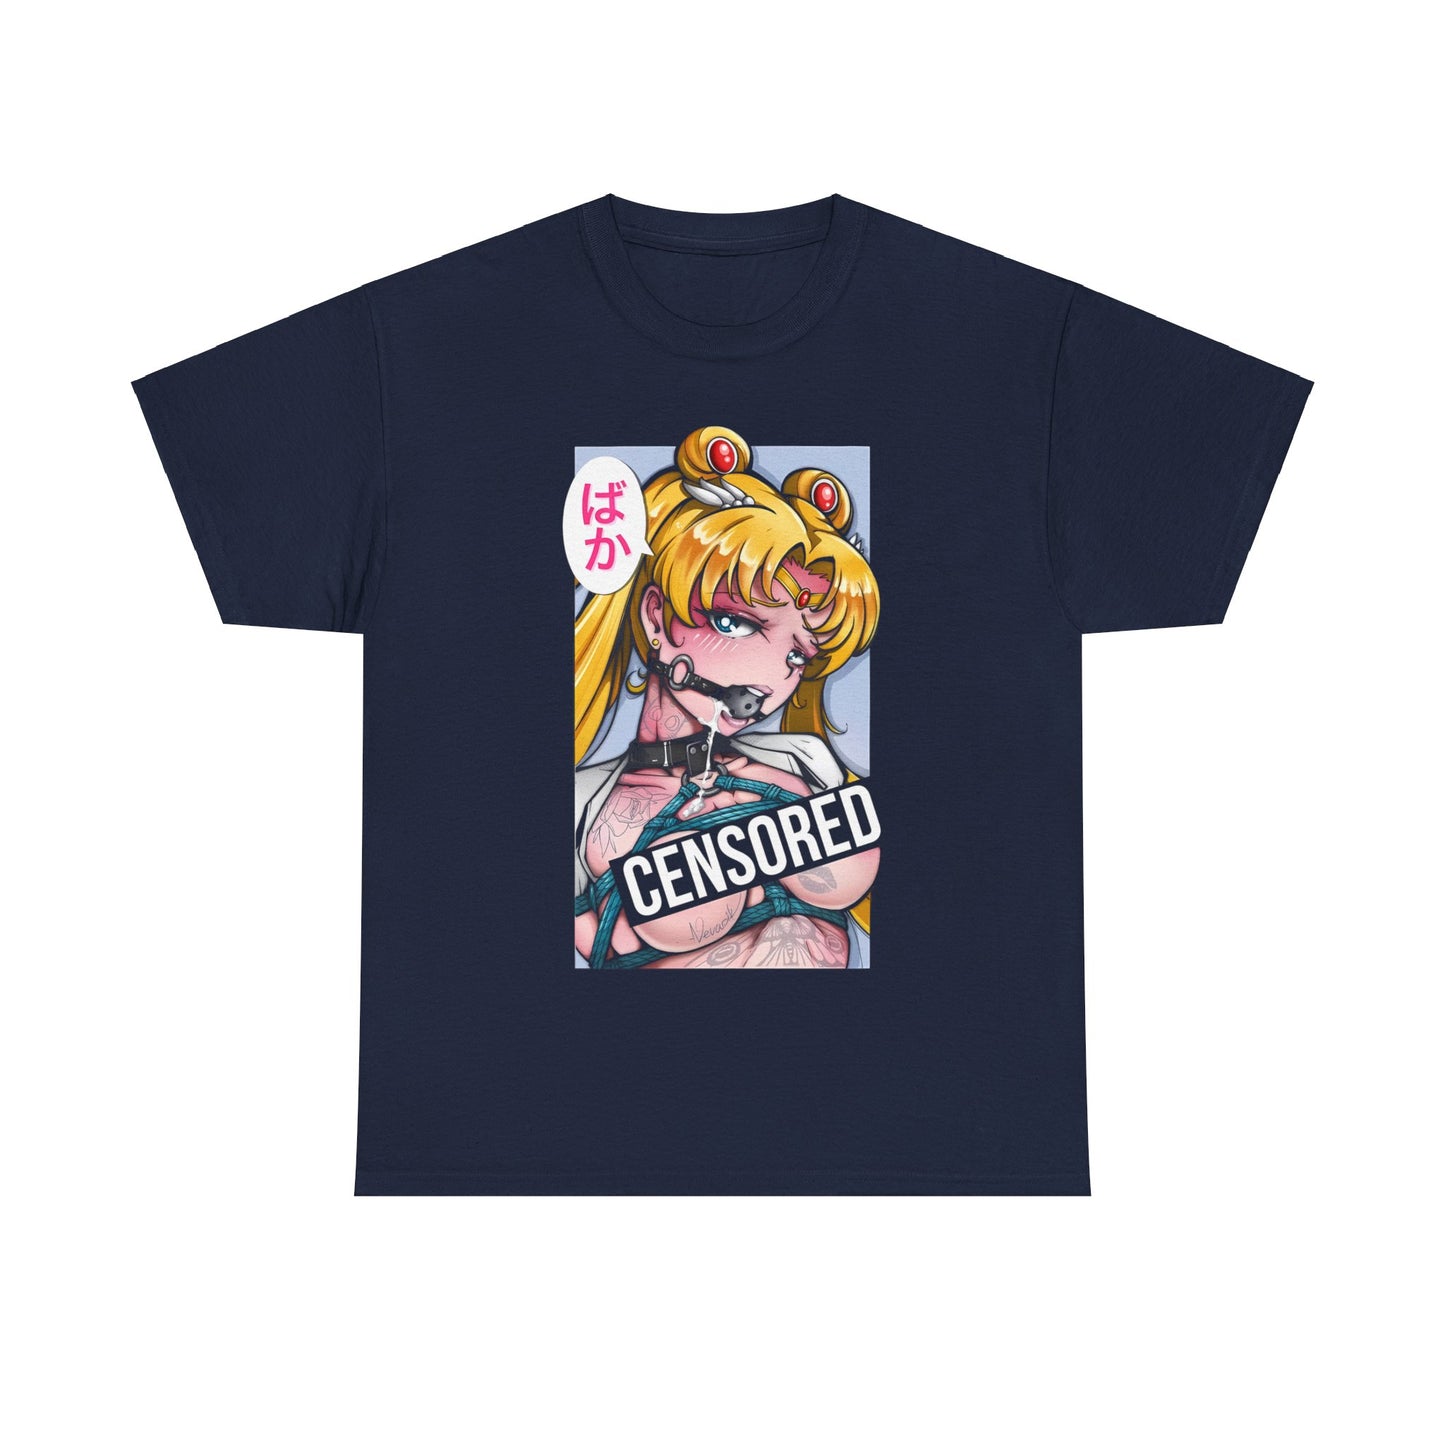 Sailor Moon - Baka T-Shirt